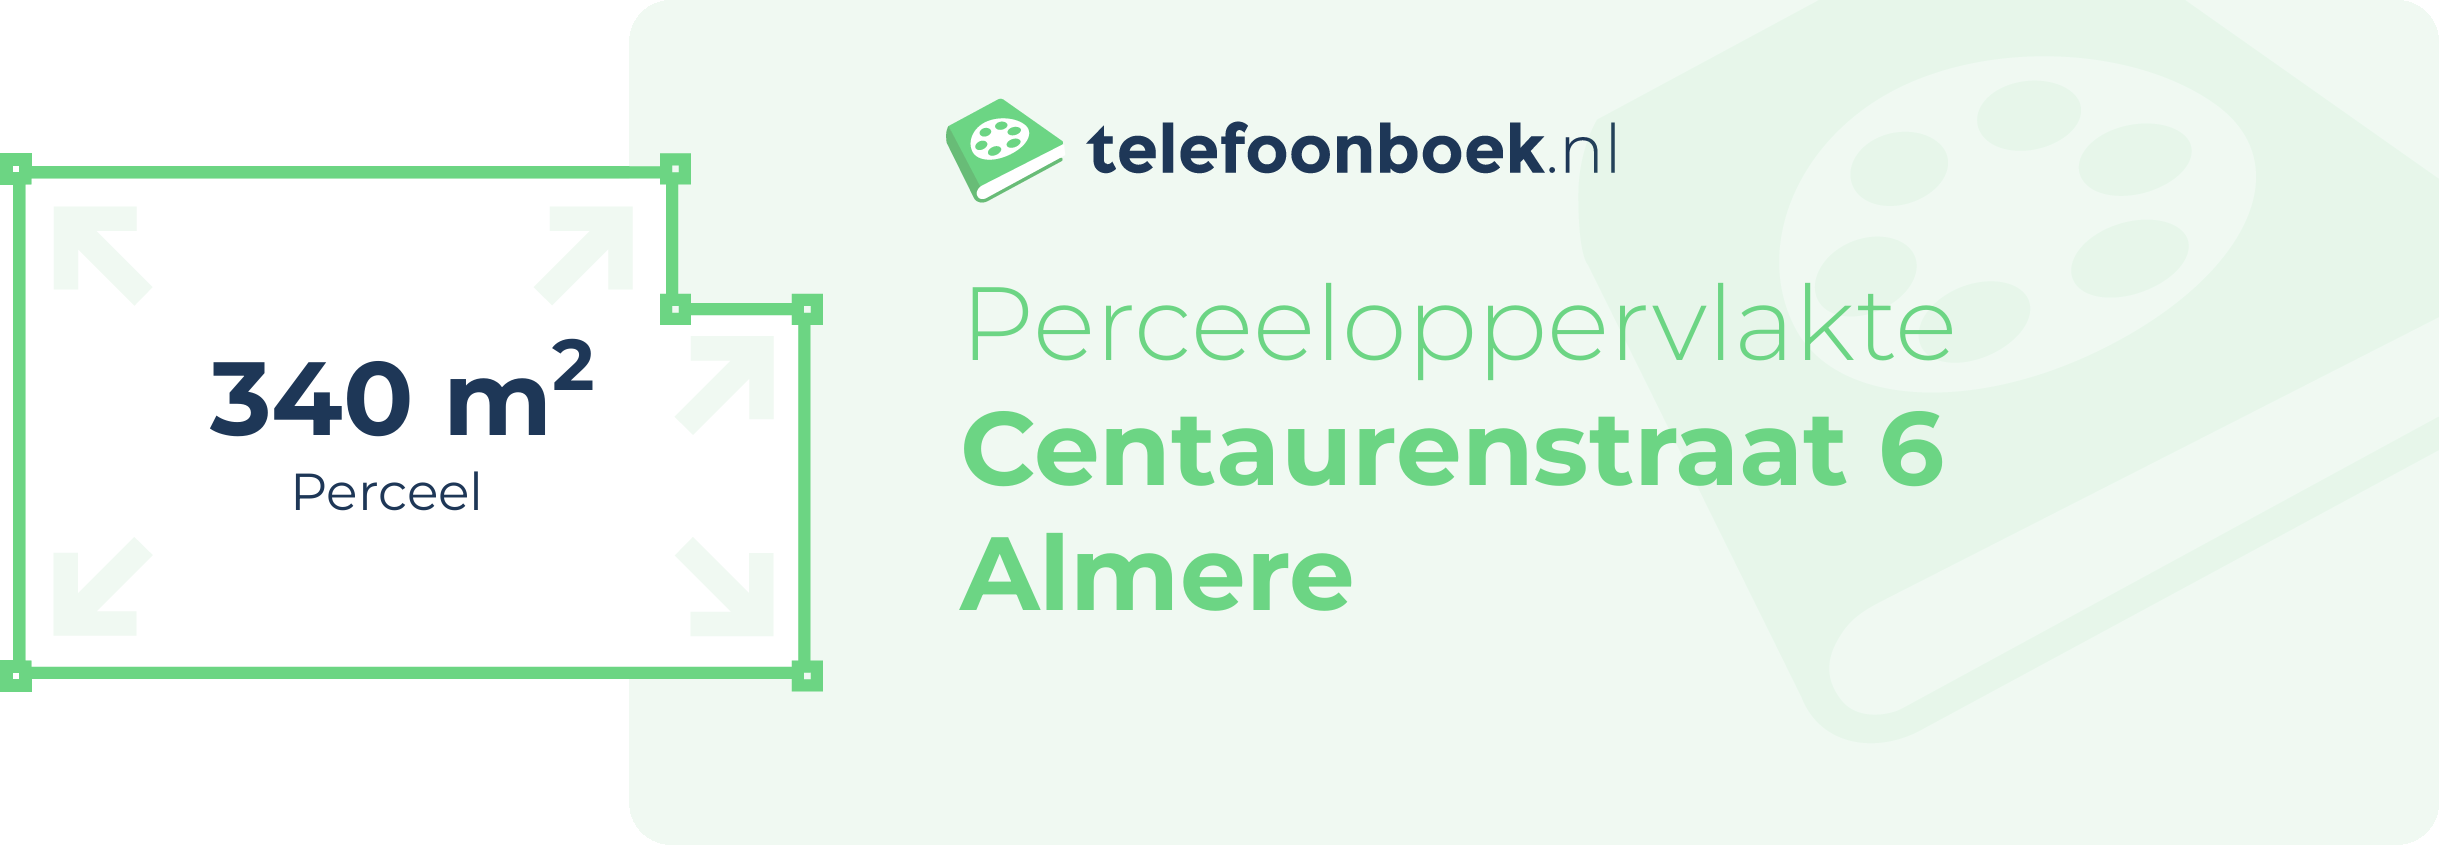 Perceeloppervlakte Centaurenstraat 6 Almere